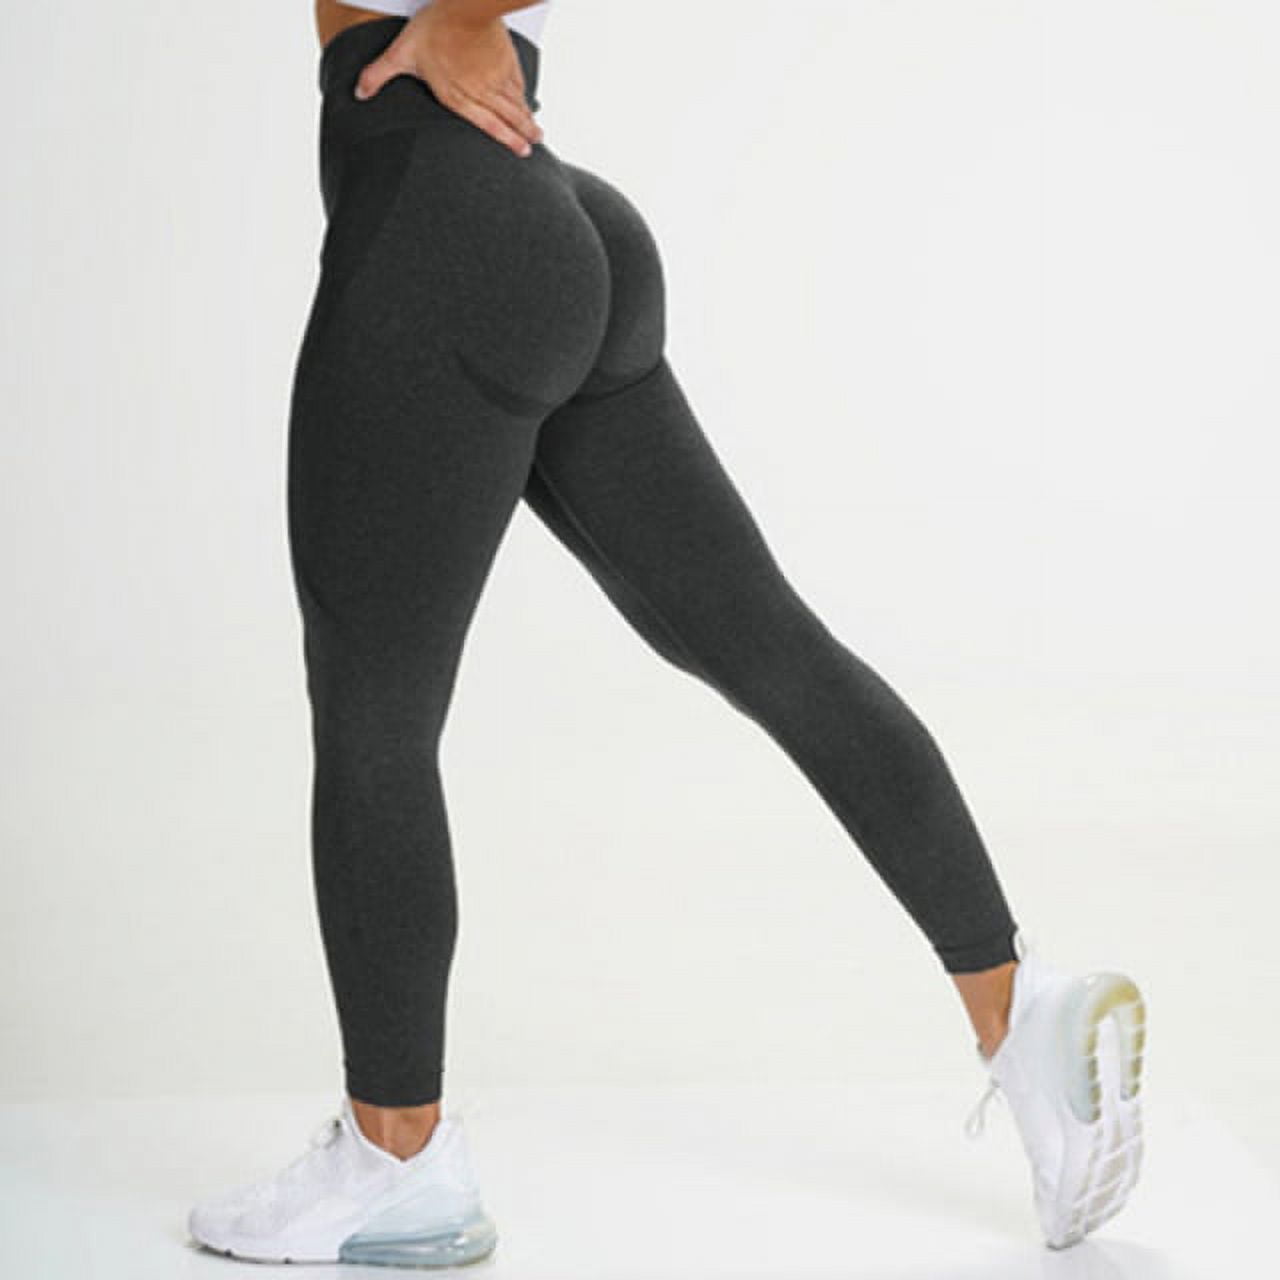 Leggings Women Yoga Pants Push Up High Waist Seamless Fitness Running  Jogging Sports Trouser Running Gym Pant Girls Leggins 